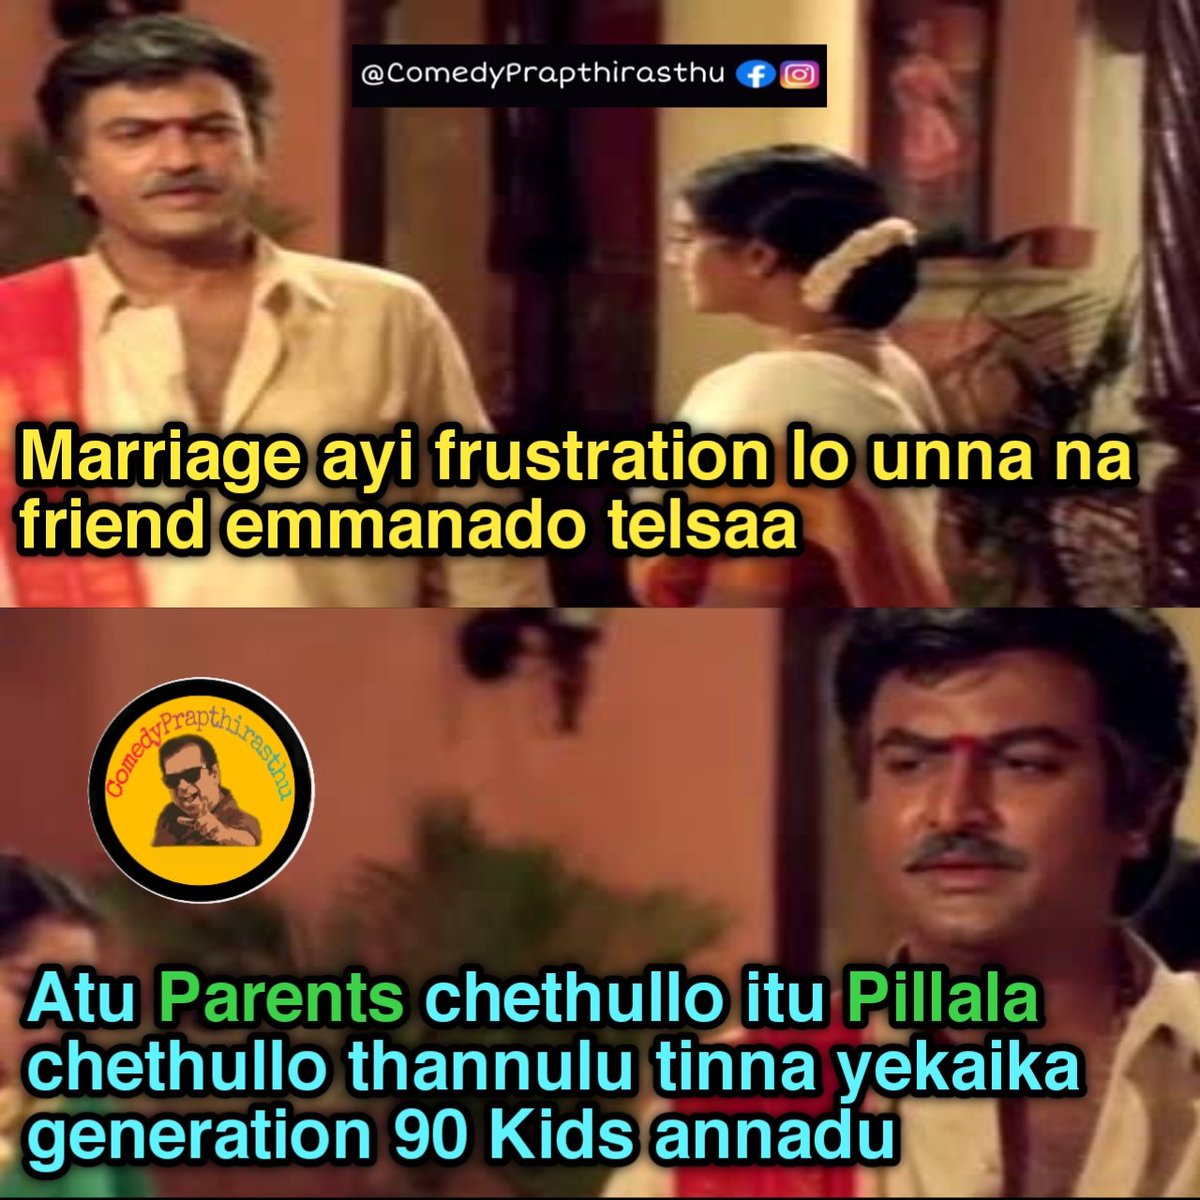 Papam ippati parents🤣🤣

Marriage aina oka friend avedhana

Tag your friends.

Follow @CPrapthirasthu

#PedaRayudu
#Telugumemes #MEMES #Trending #DhamakaFromDec23
#18PagesOnDec23